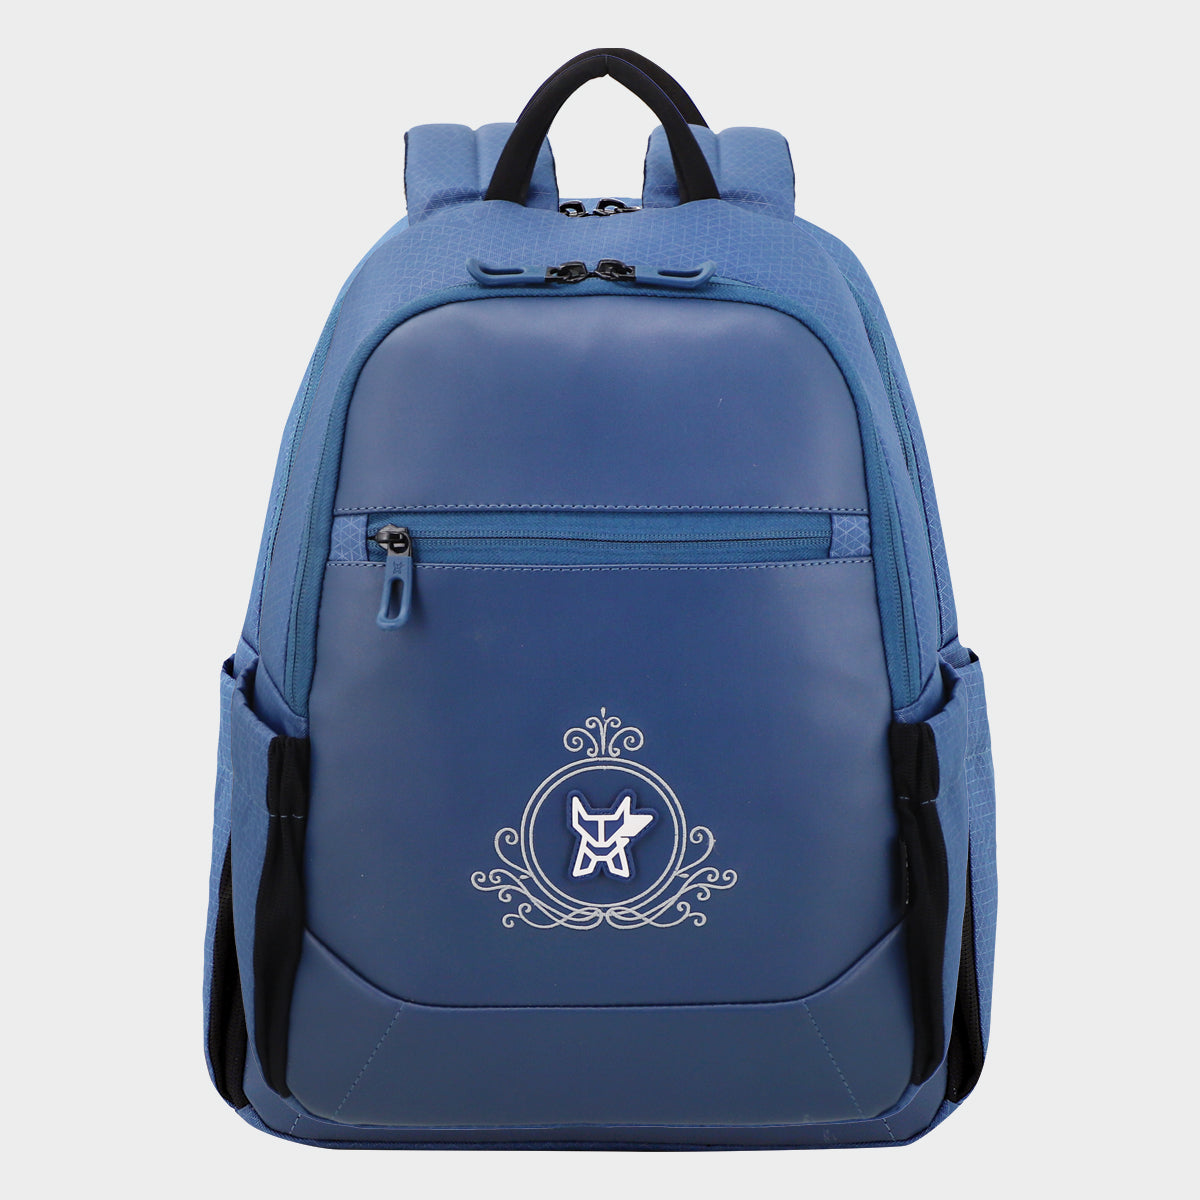 gifton Parashoot Quality Black Color School/College bags for girl-Trendy Bag  Waterproof Backpack 10 L Backpack Black, Pink - Price in India |  Flipkart.com